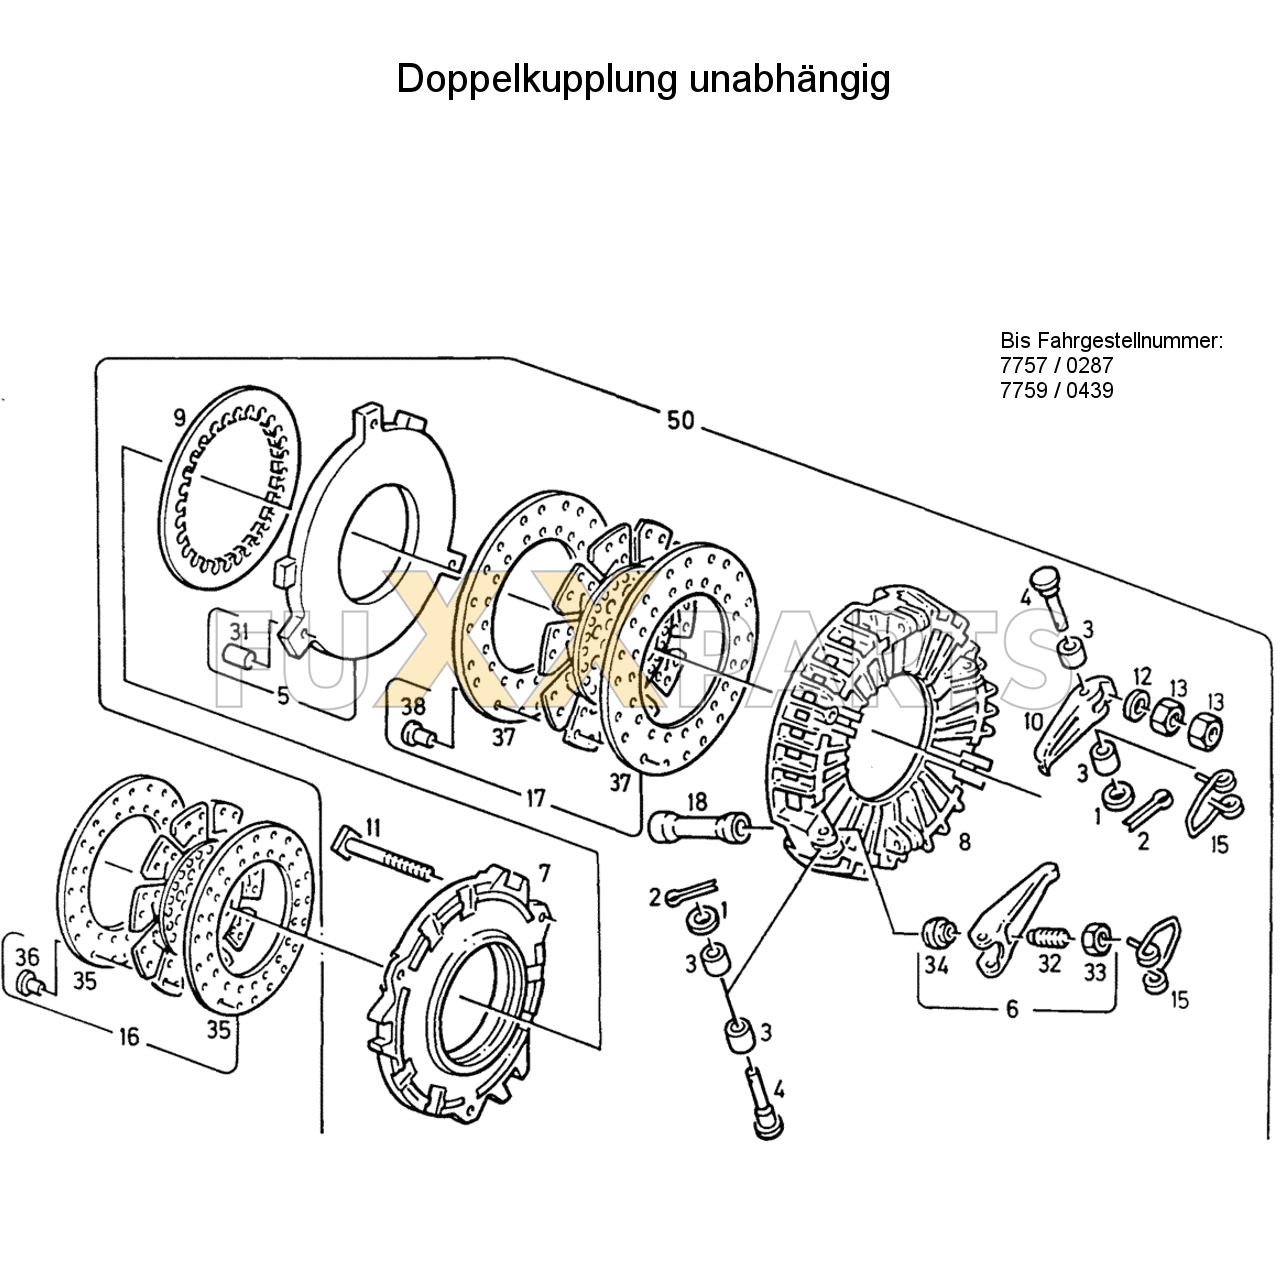 D 7807 C Doppelkupplung unabhängig 1